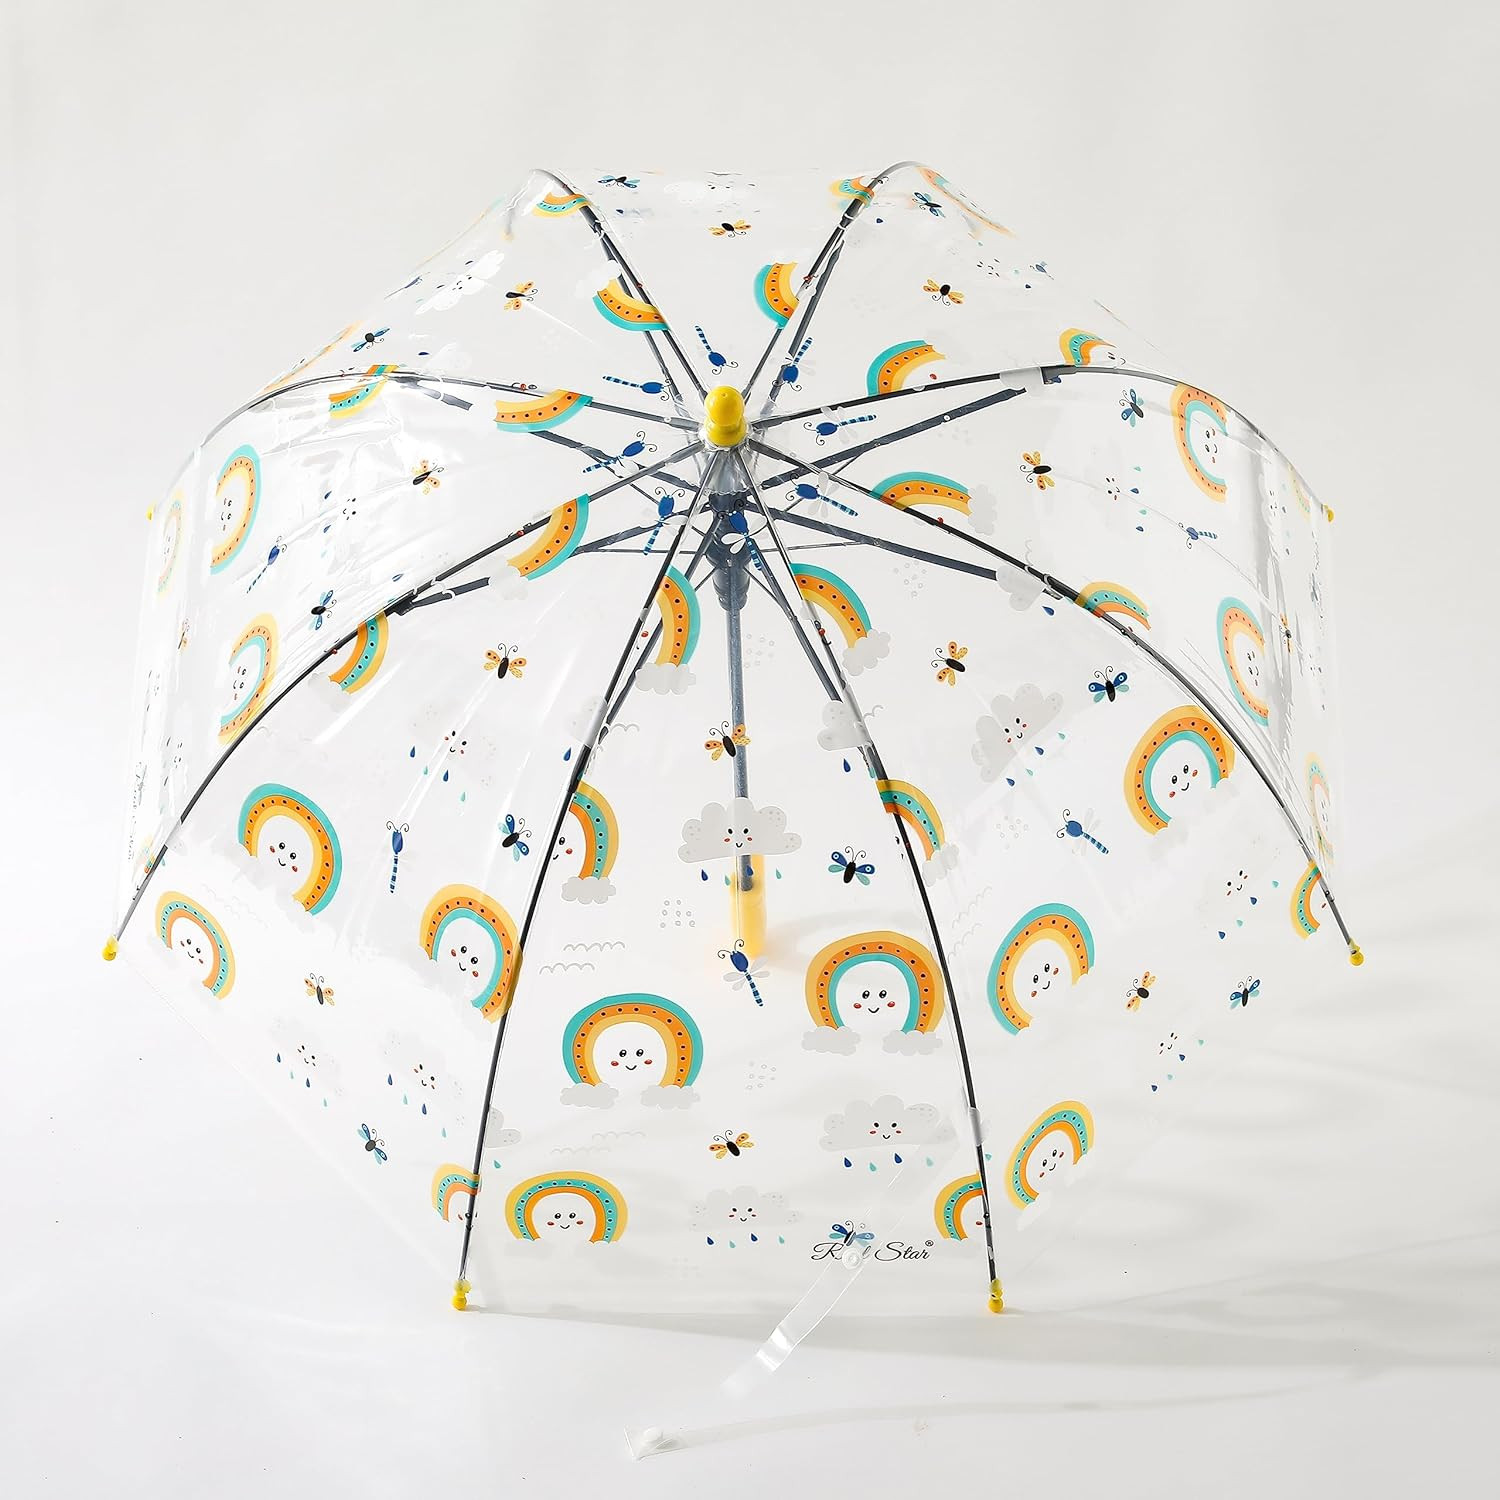 Kuber Industries Transparent Umbrella For Men & Women|Automatic Umbrella For Rain (Yellow)